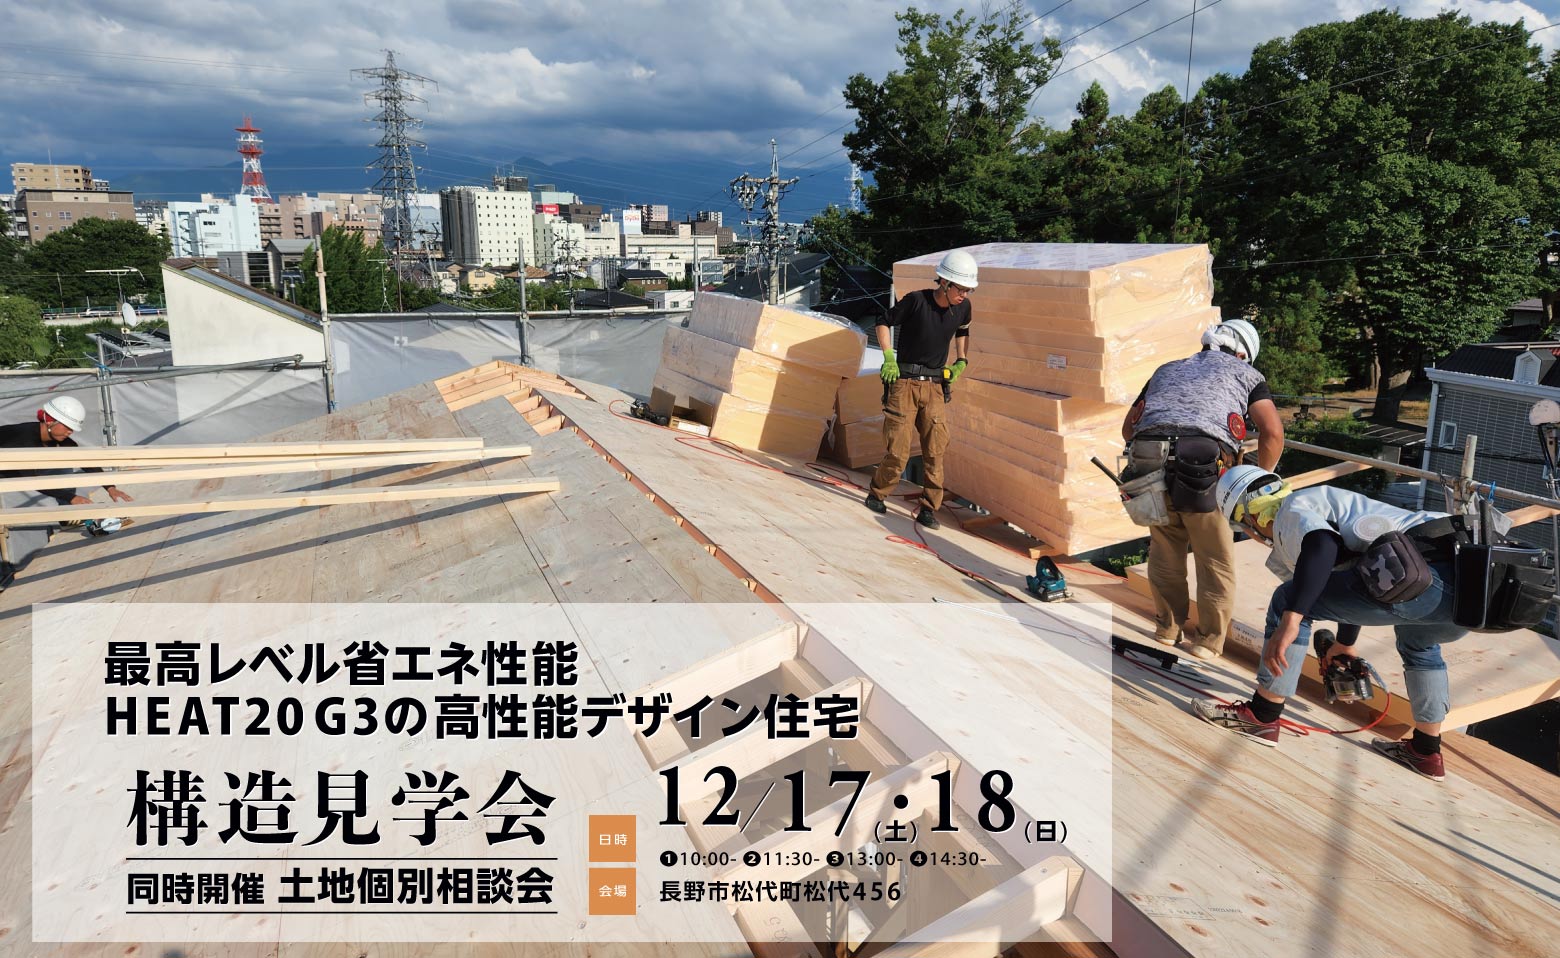 2022/12/17・18HEAT20G3高性能デザイン住宅構造見学会/中澤勝一建築